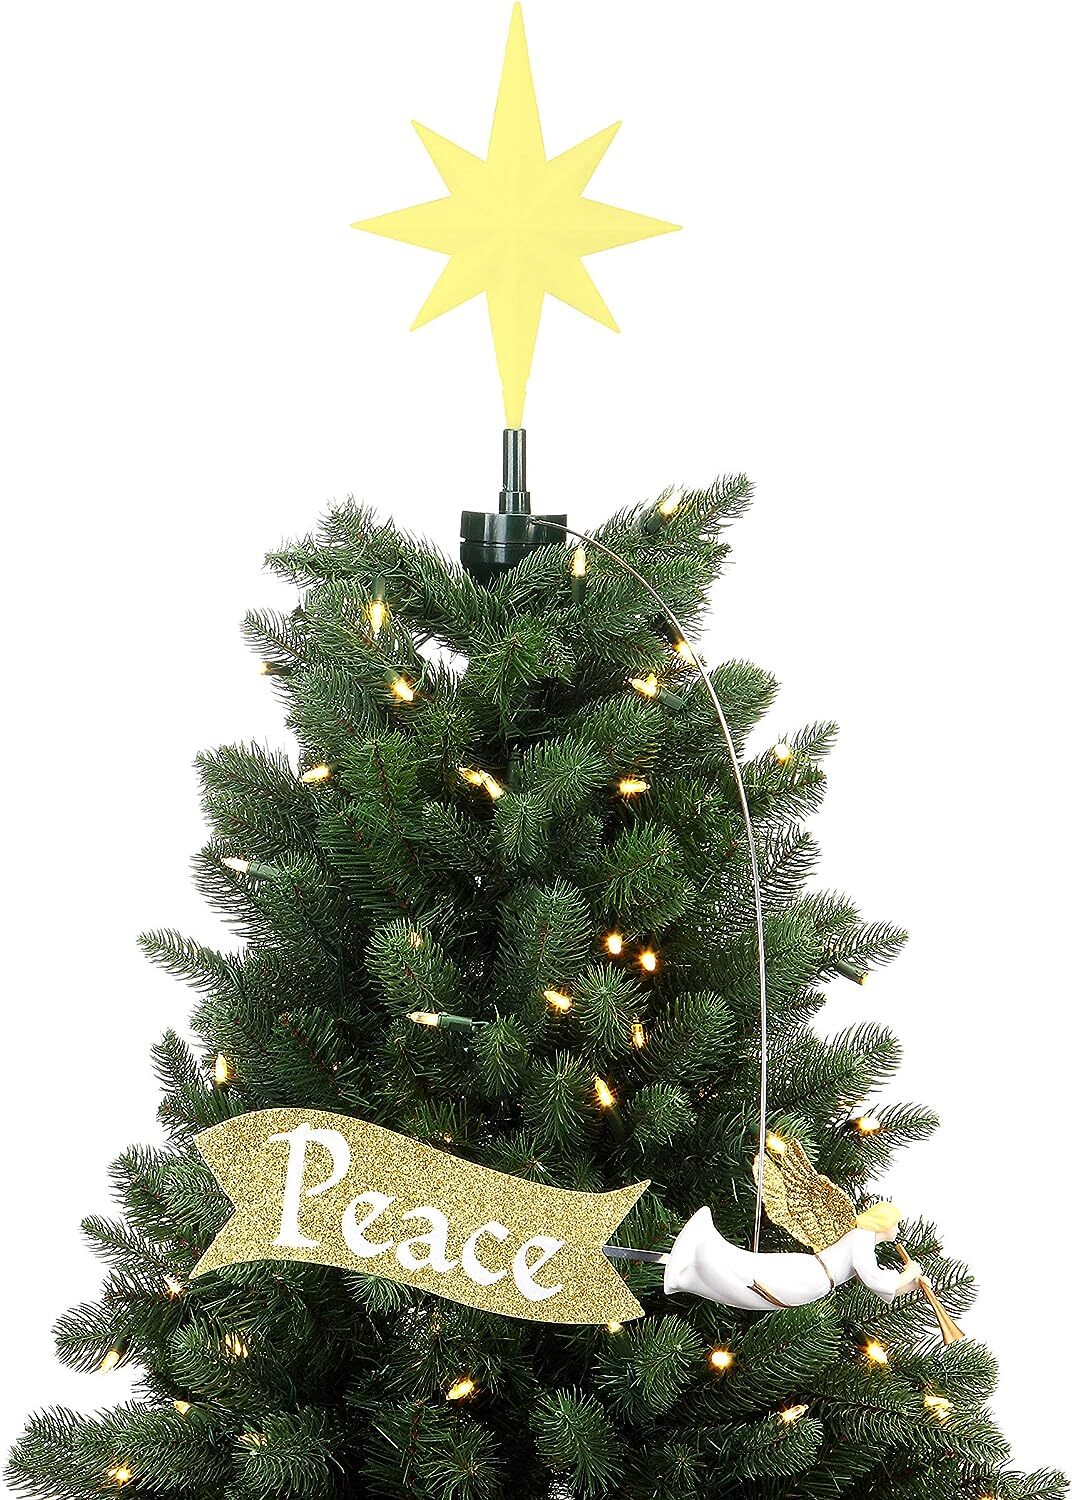 Mr. Christmas Animated Tree Topper-Carousel Christmas Decoration, Multi